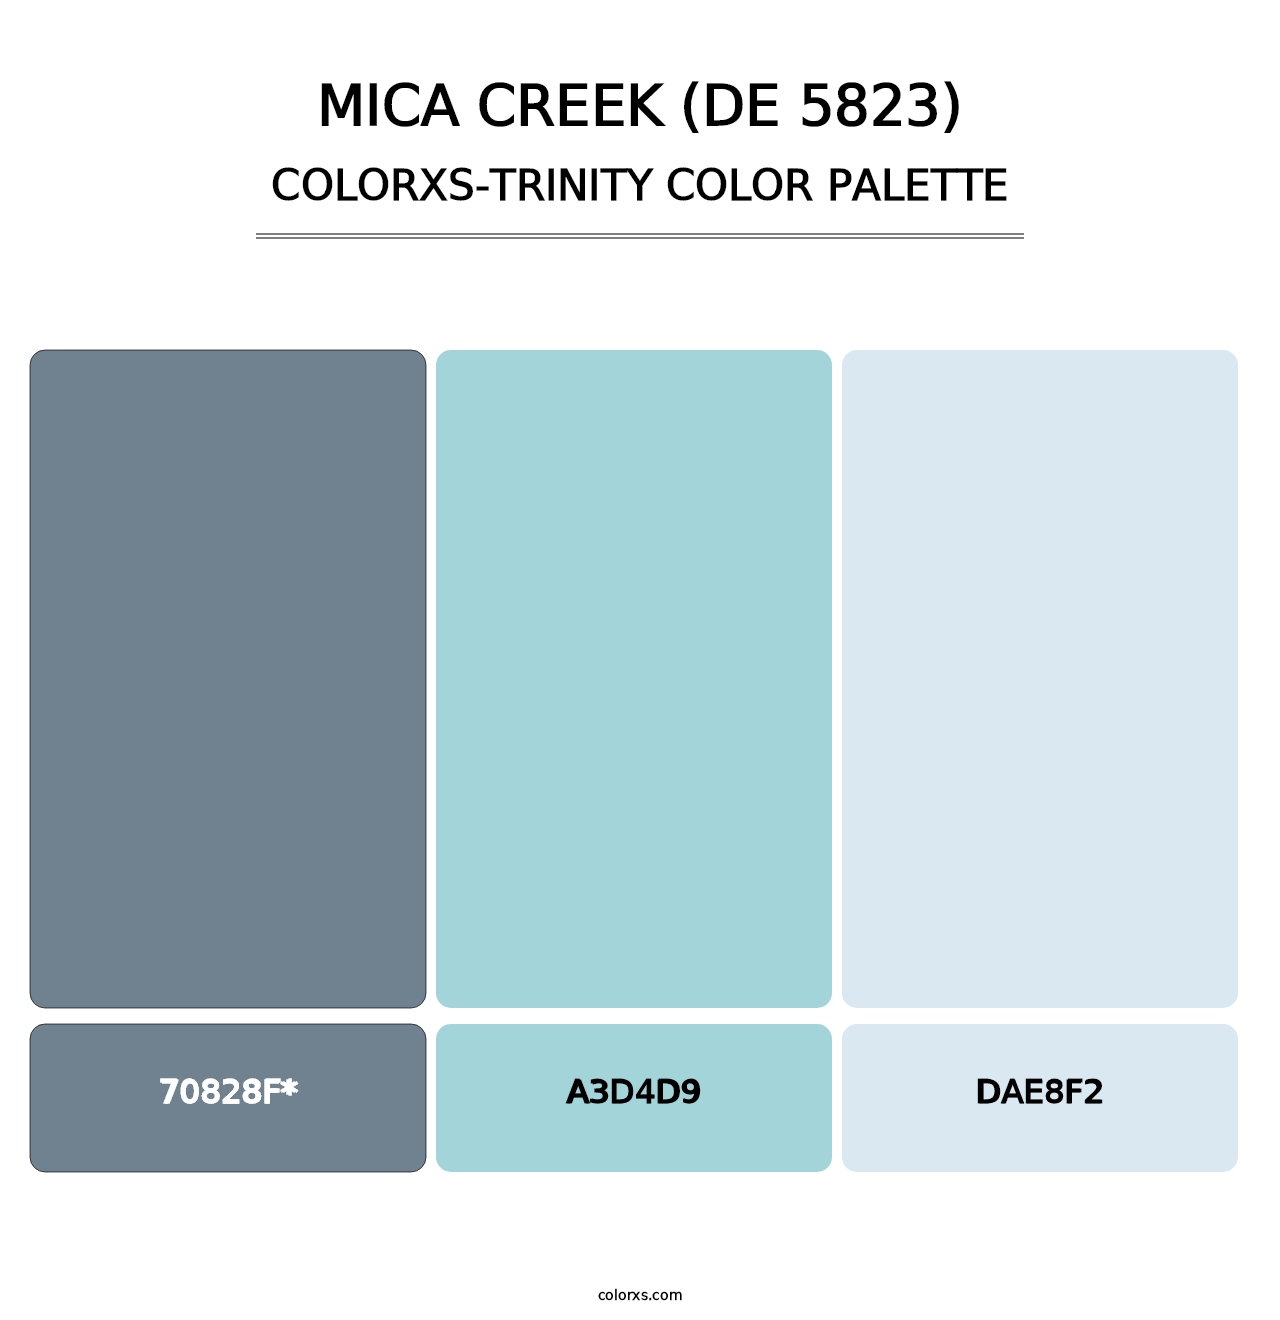 Mica Creek (DE 5823) - Colorxs Trinity Palette